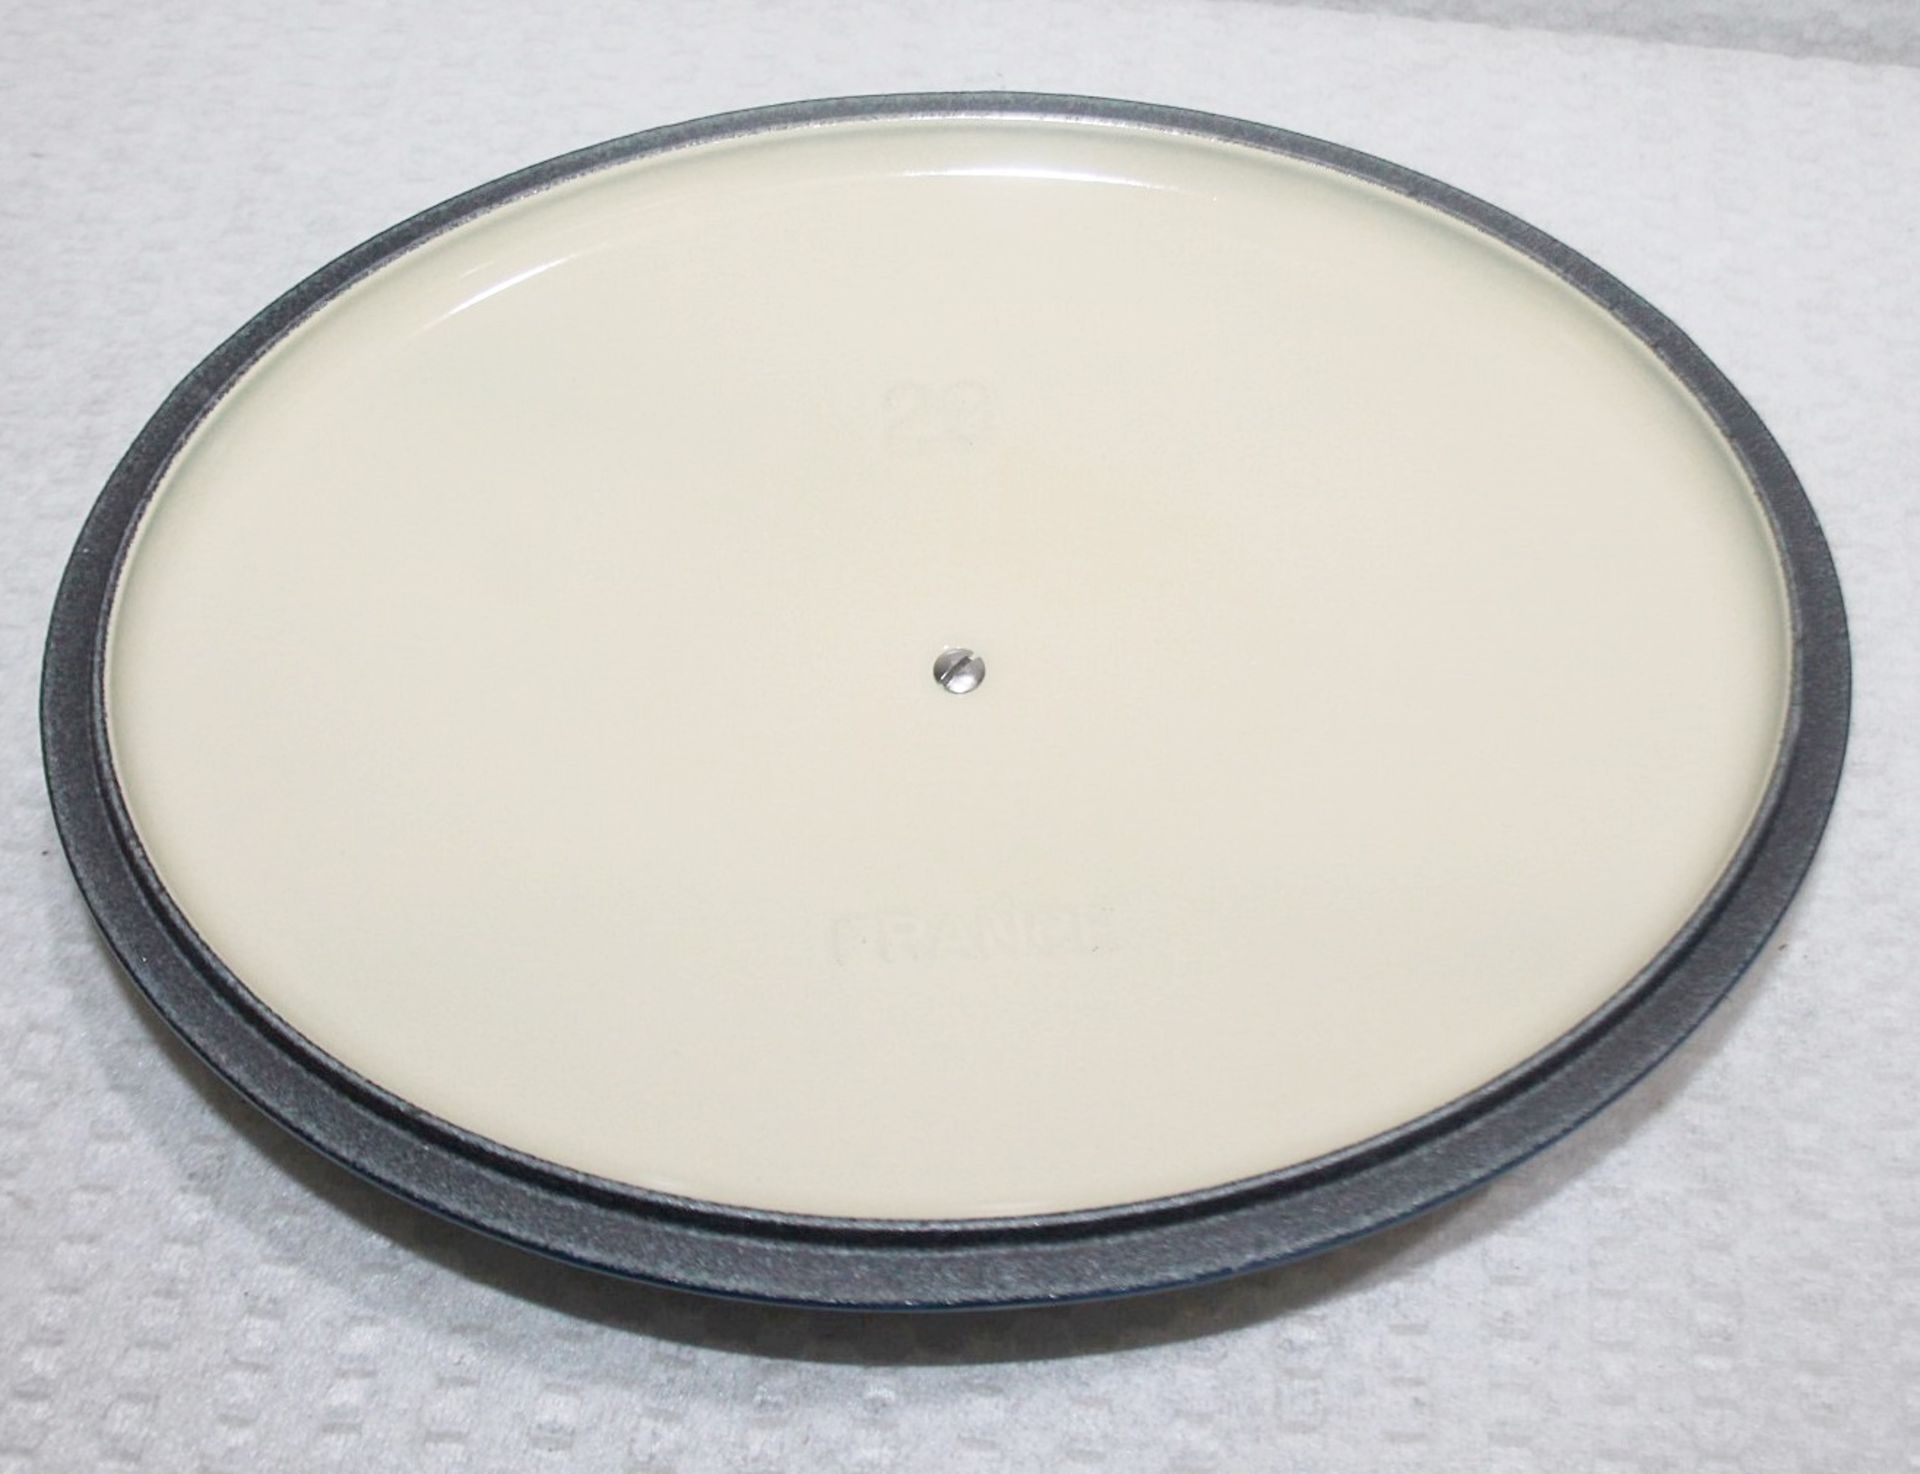 1 x LE CREUSET 'Signature' Enamelled Cast Iron 29cm Oval Casserole Dish In Blue - RRP £295.00 - Image 8 of 9